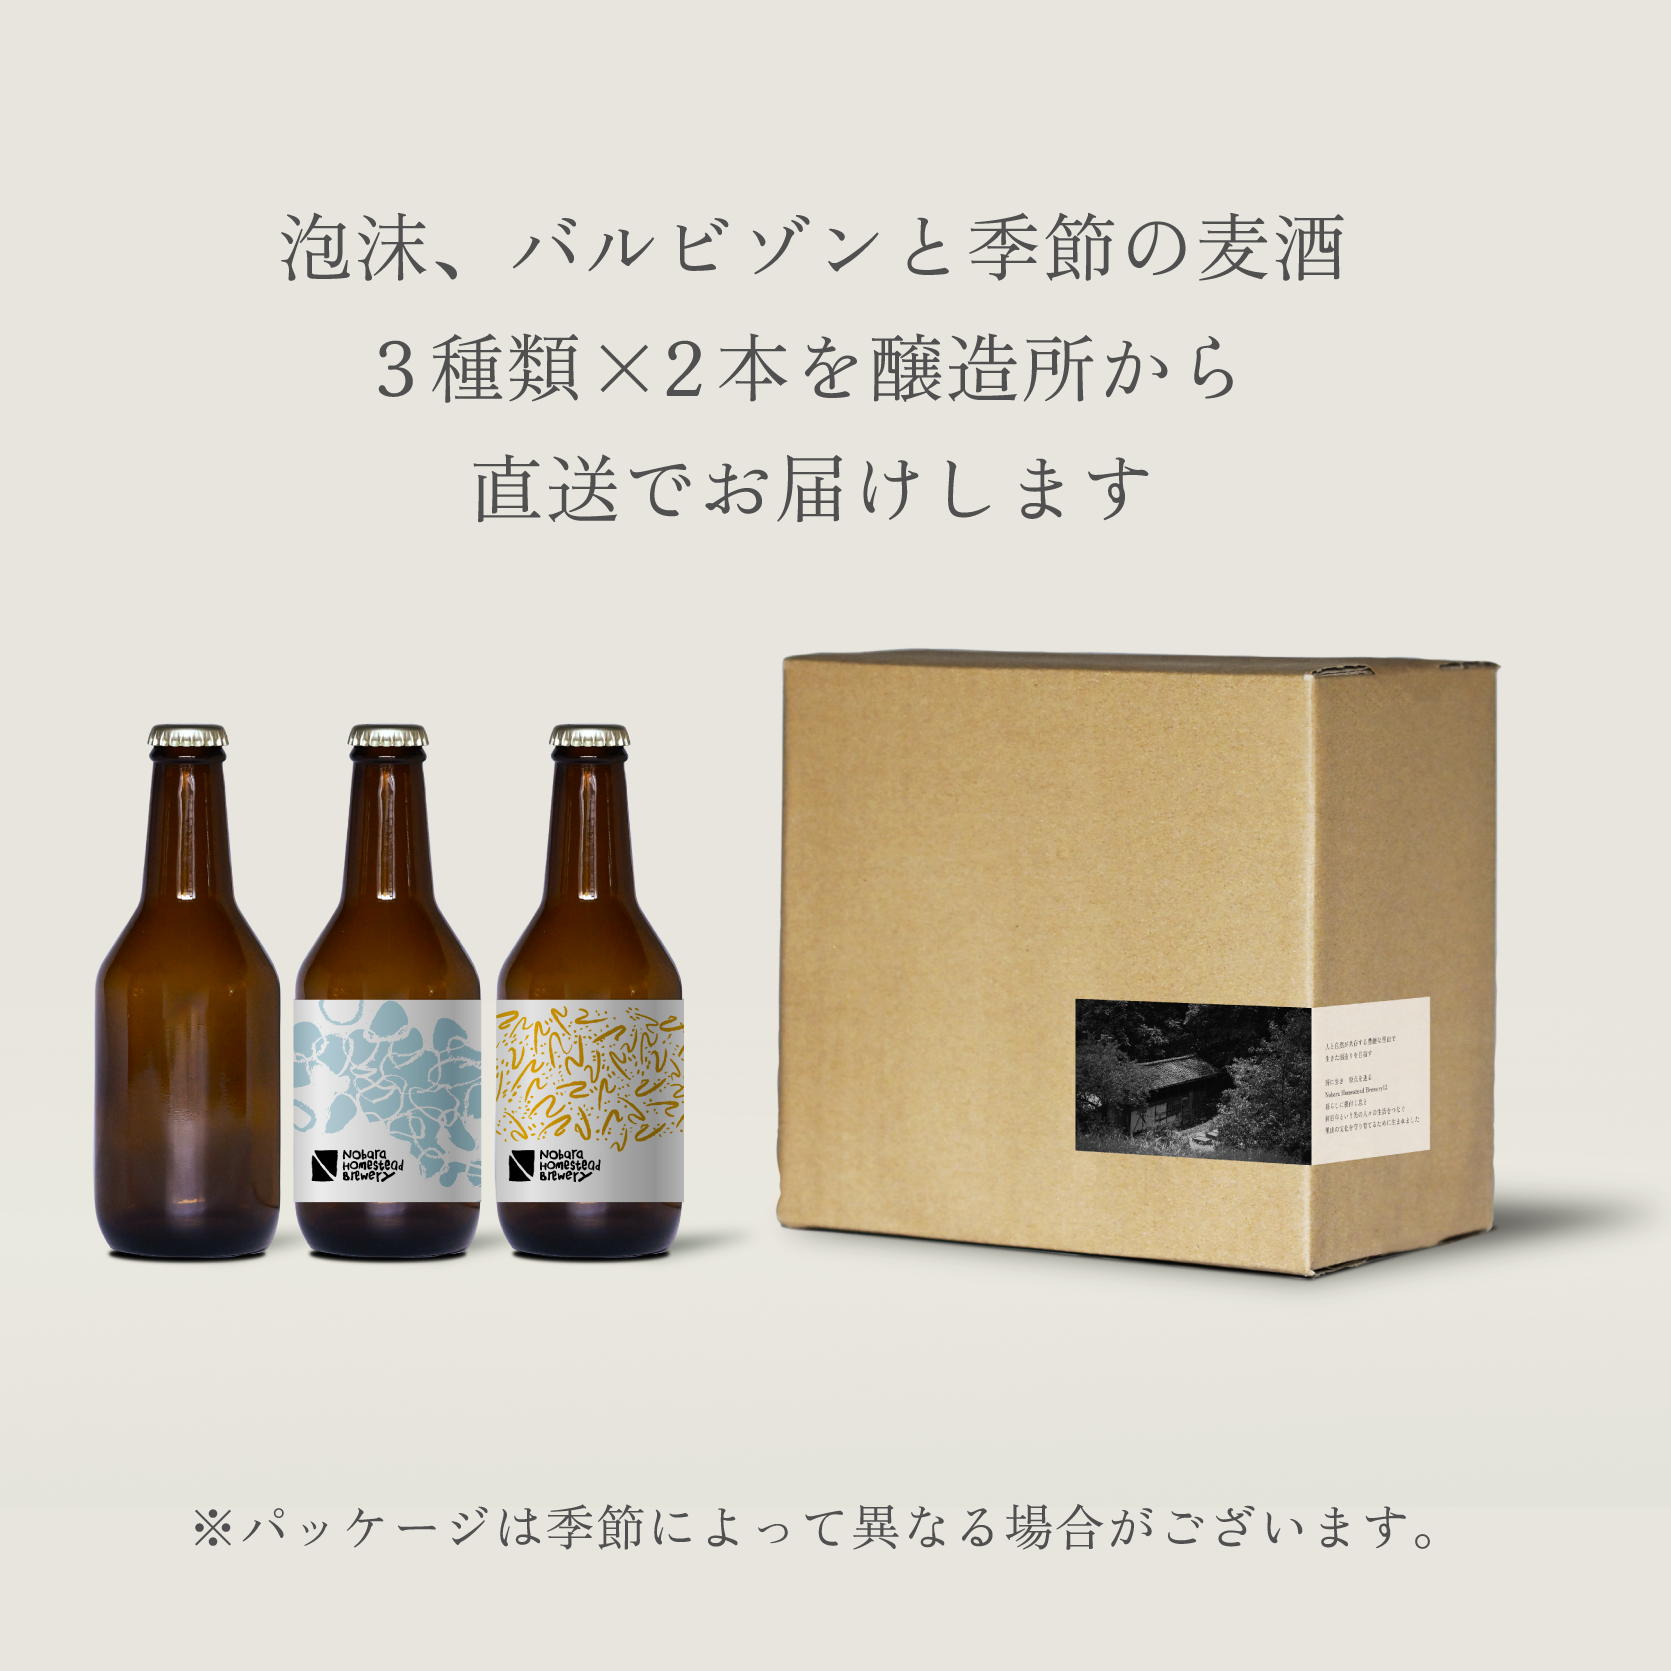 Nobara Homestead Brewery 信州青木村産クラフトビール　330ml×6本セット